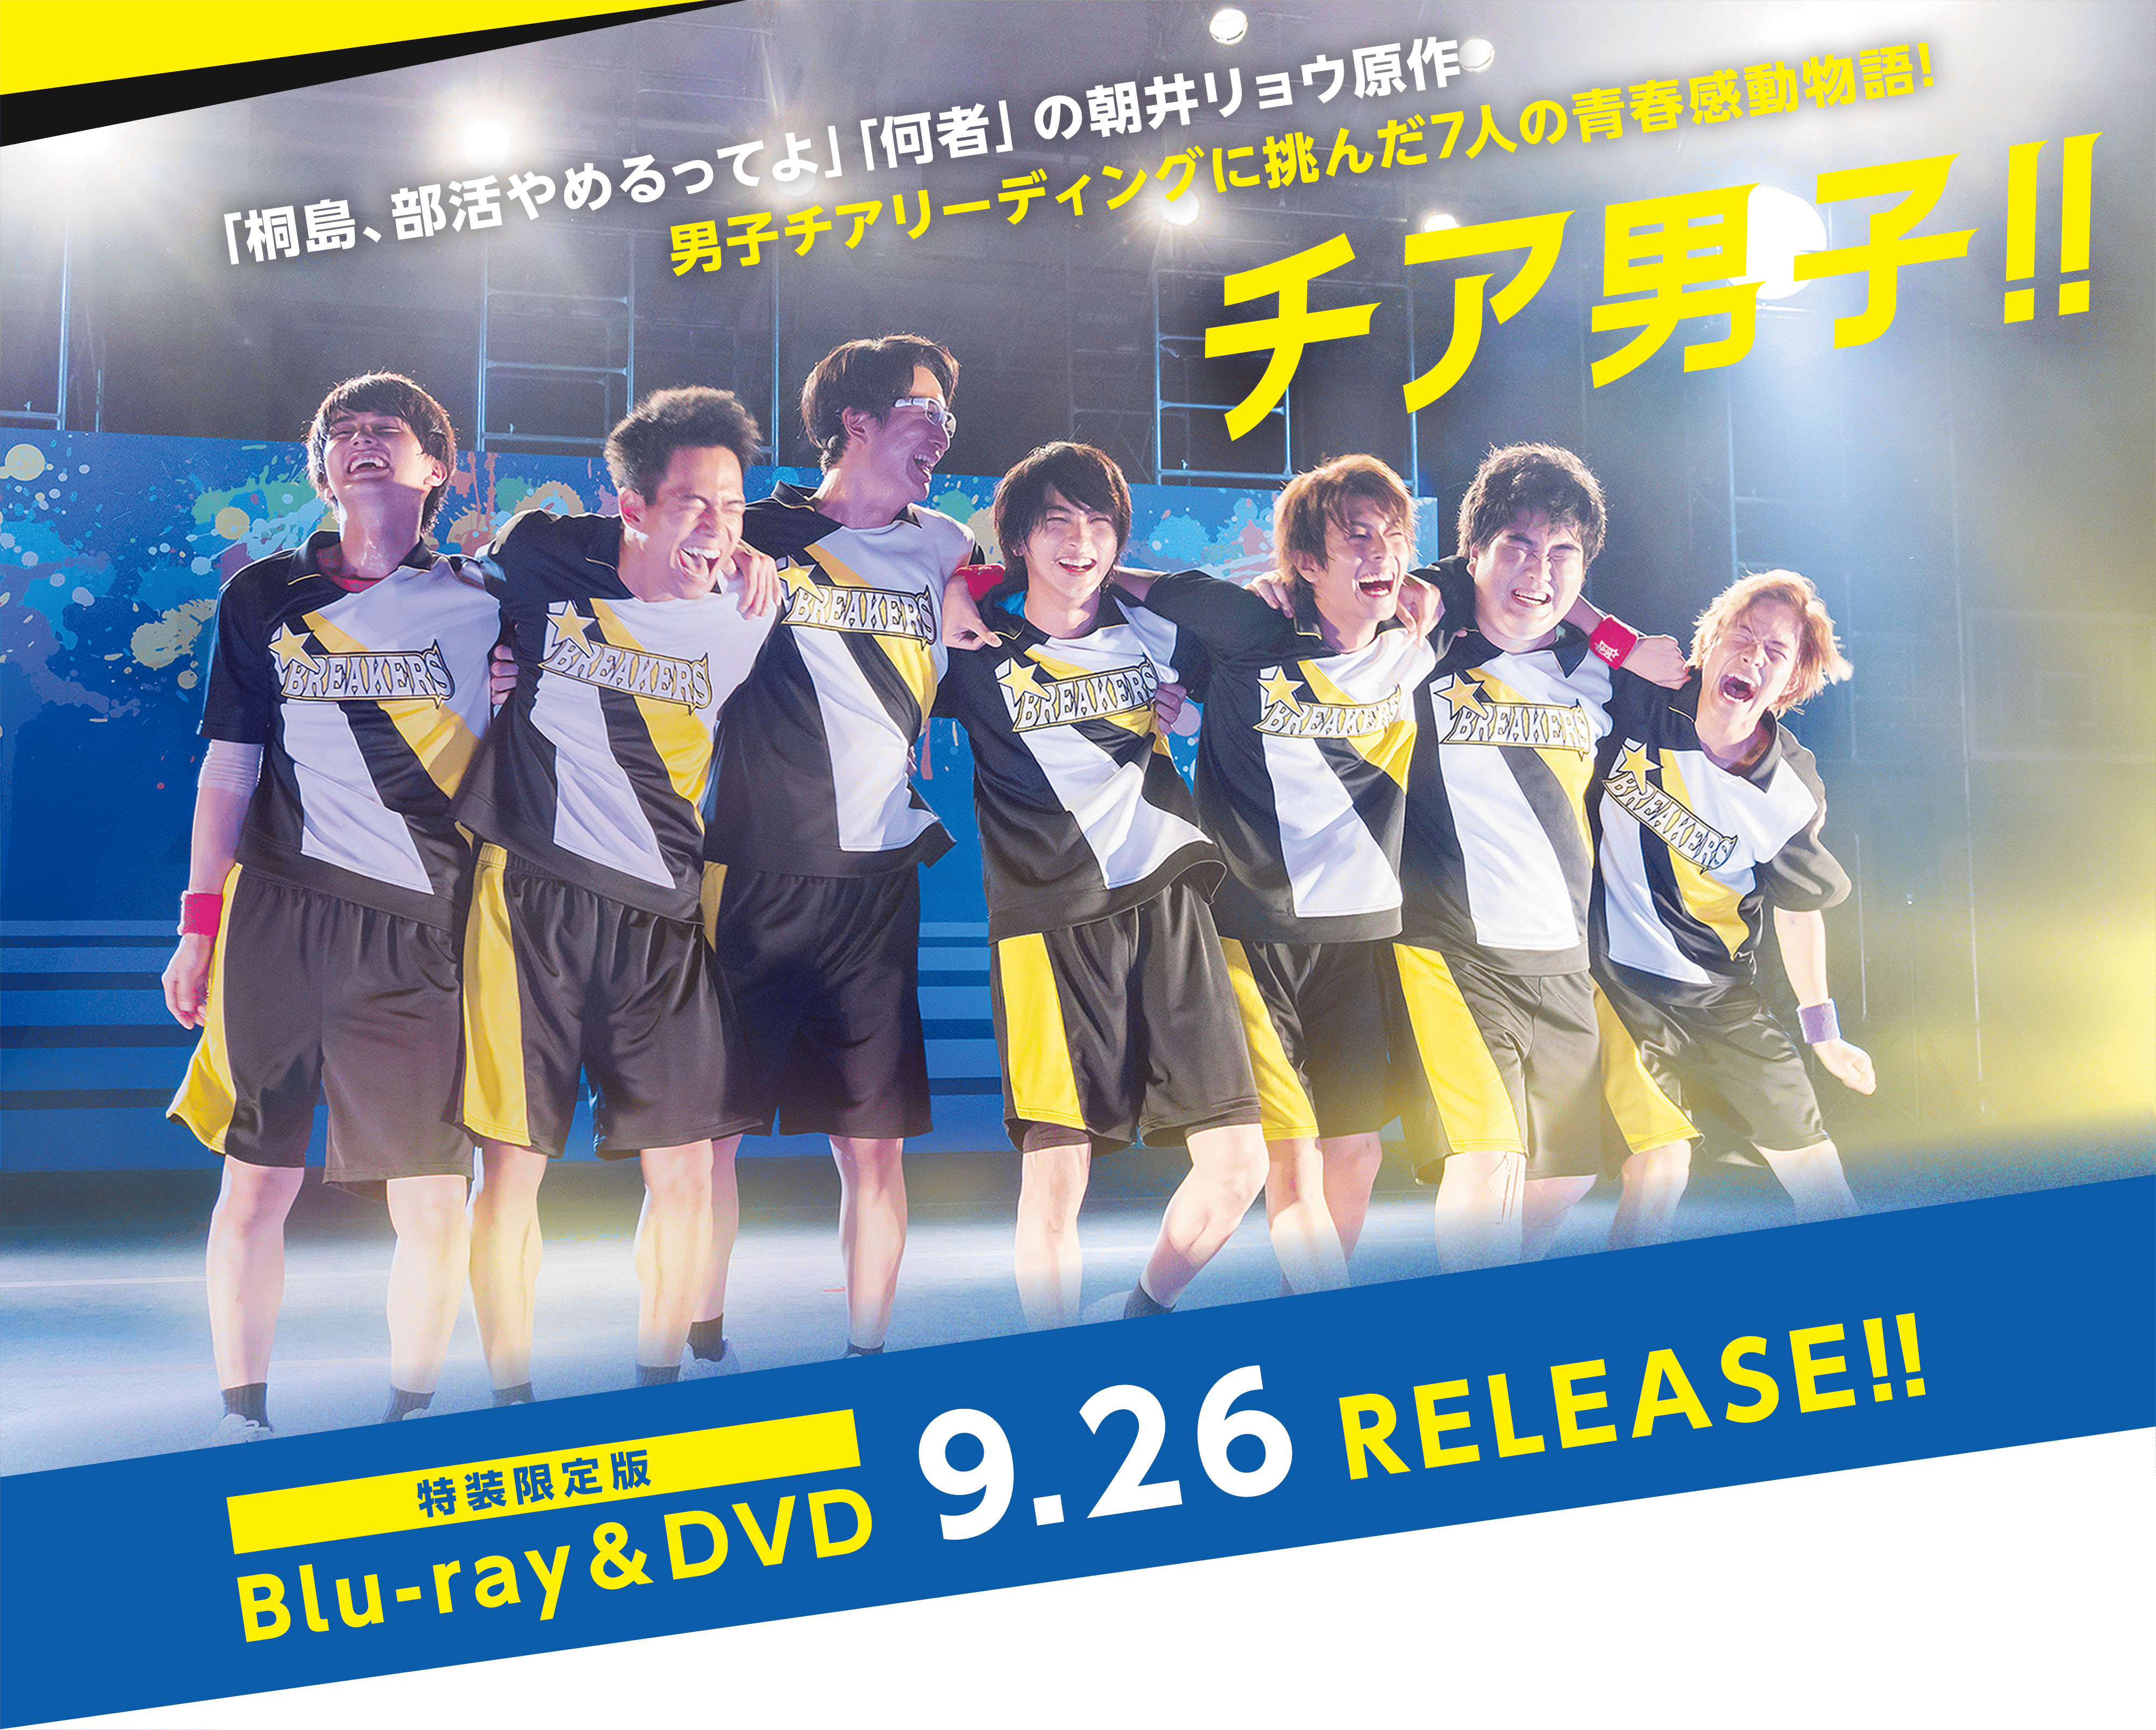 映画『チア男子!!』Blu-ray&DVD 特装限定版 9.26 RELEASE!!